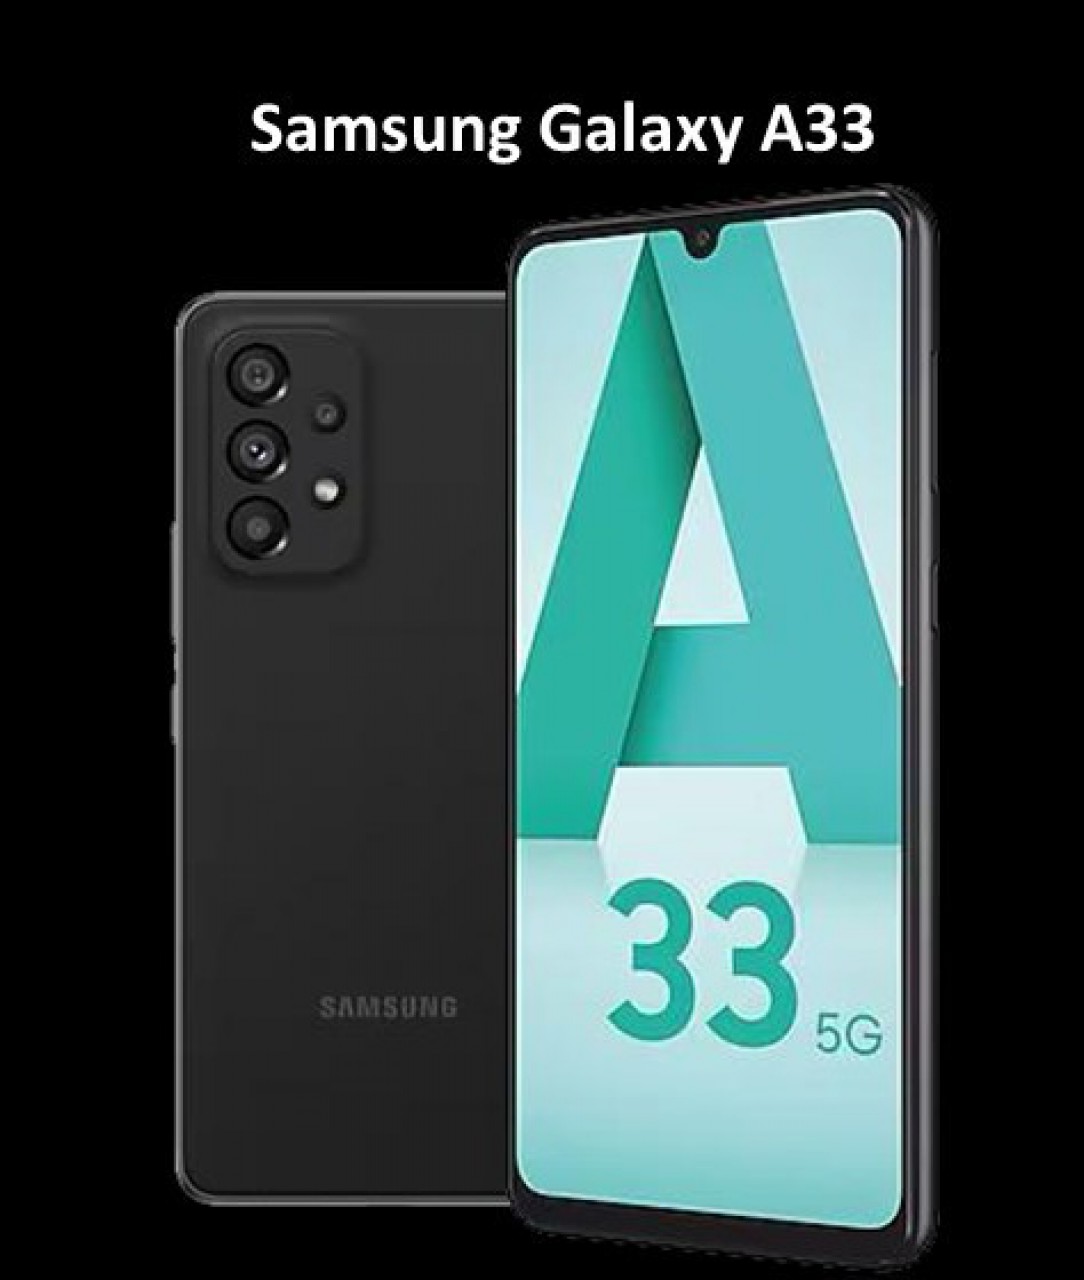 Samsung Galaxy A33, Telemóveis, Bissau